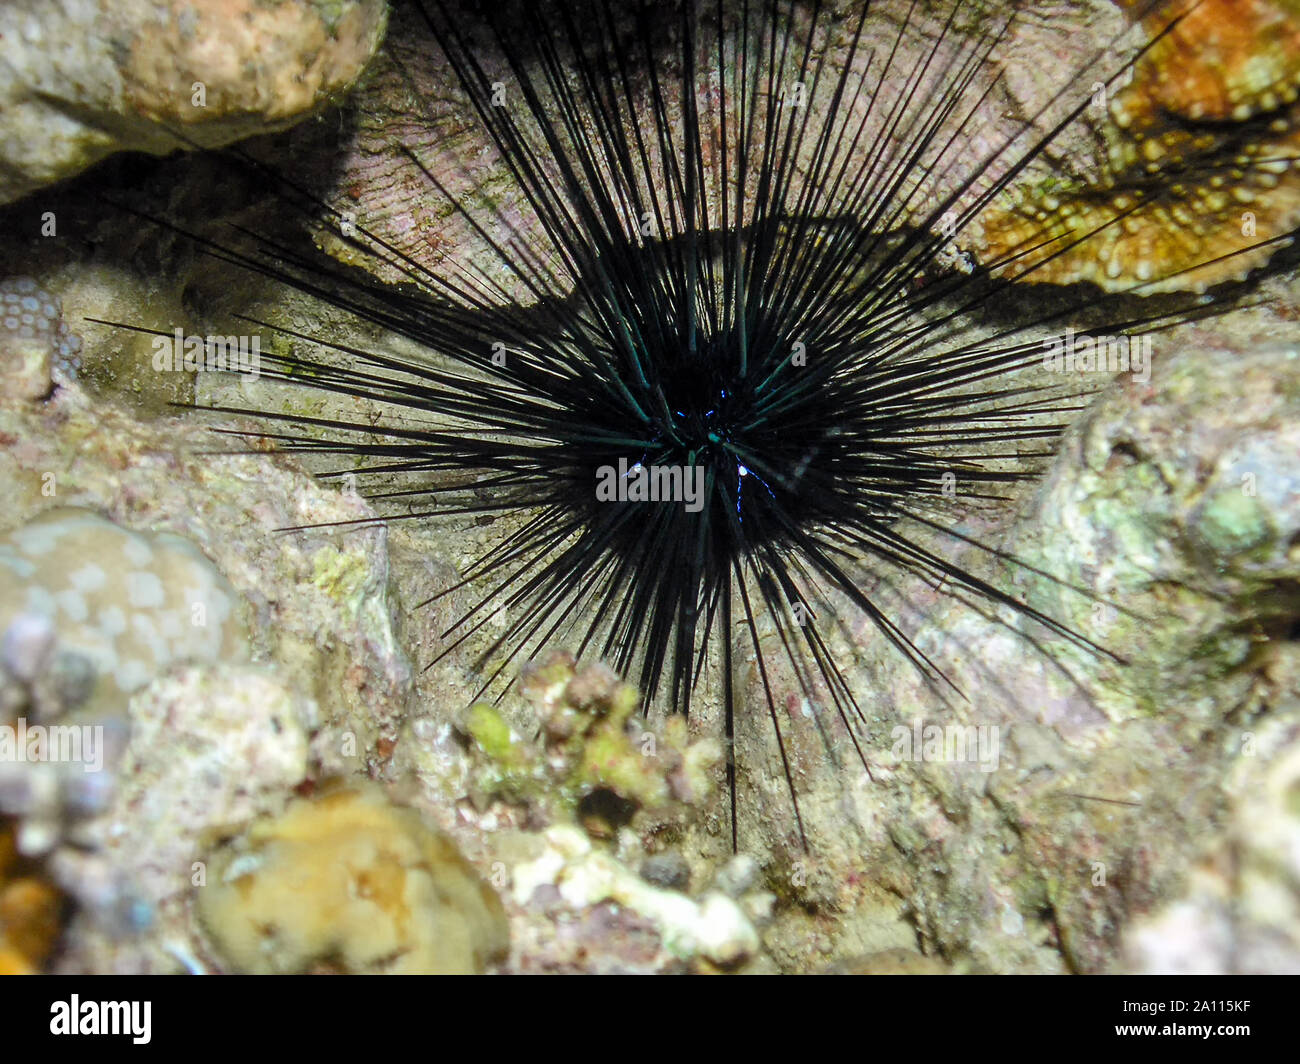 Long Spined Sea Urchin (Diadema antillarum) Stock Photo